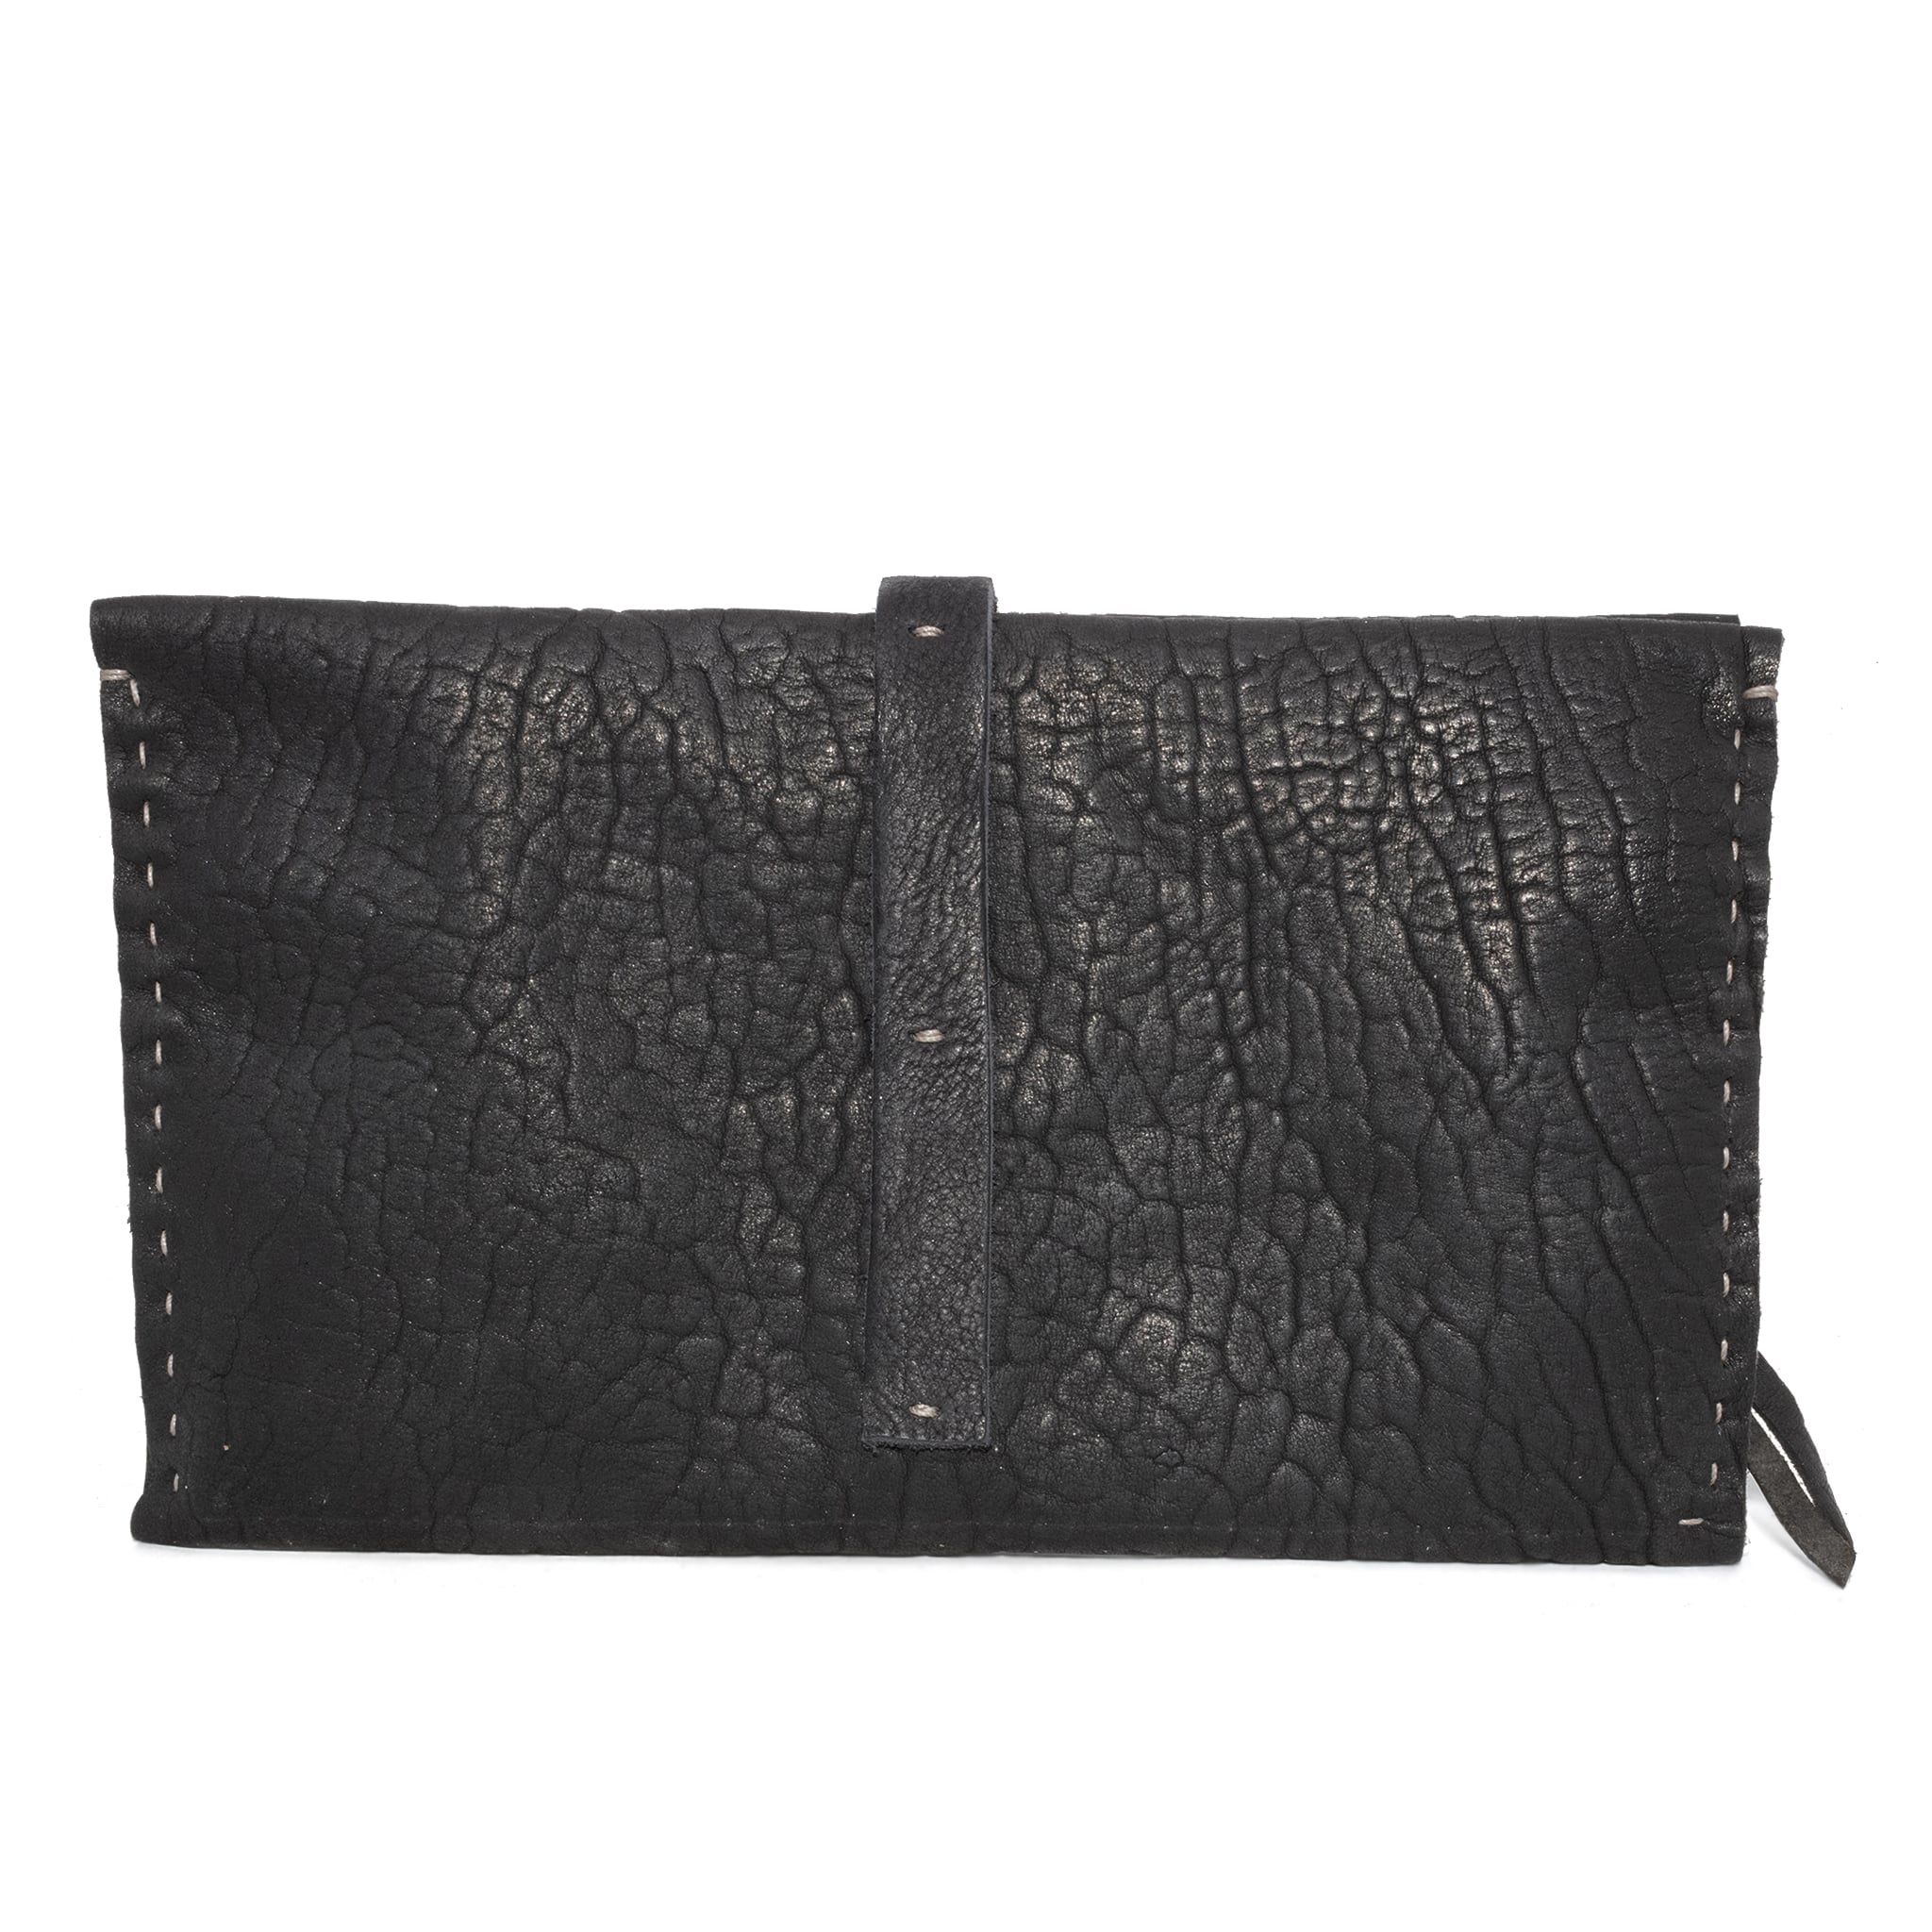 avant garde black culatta leather wallet available from atelier skn